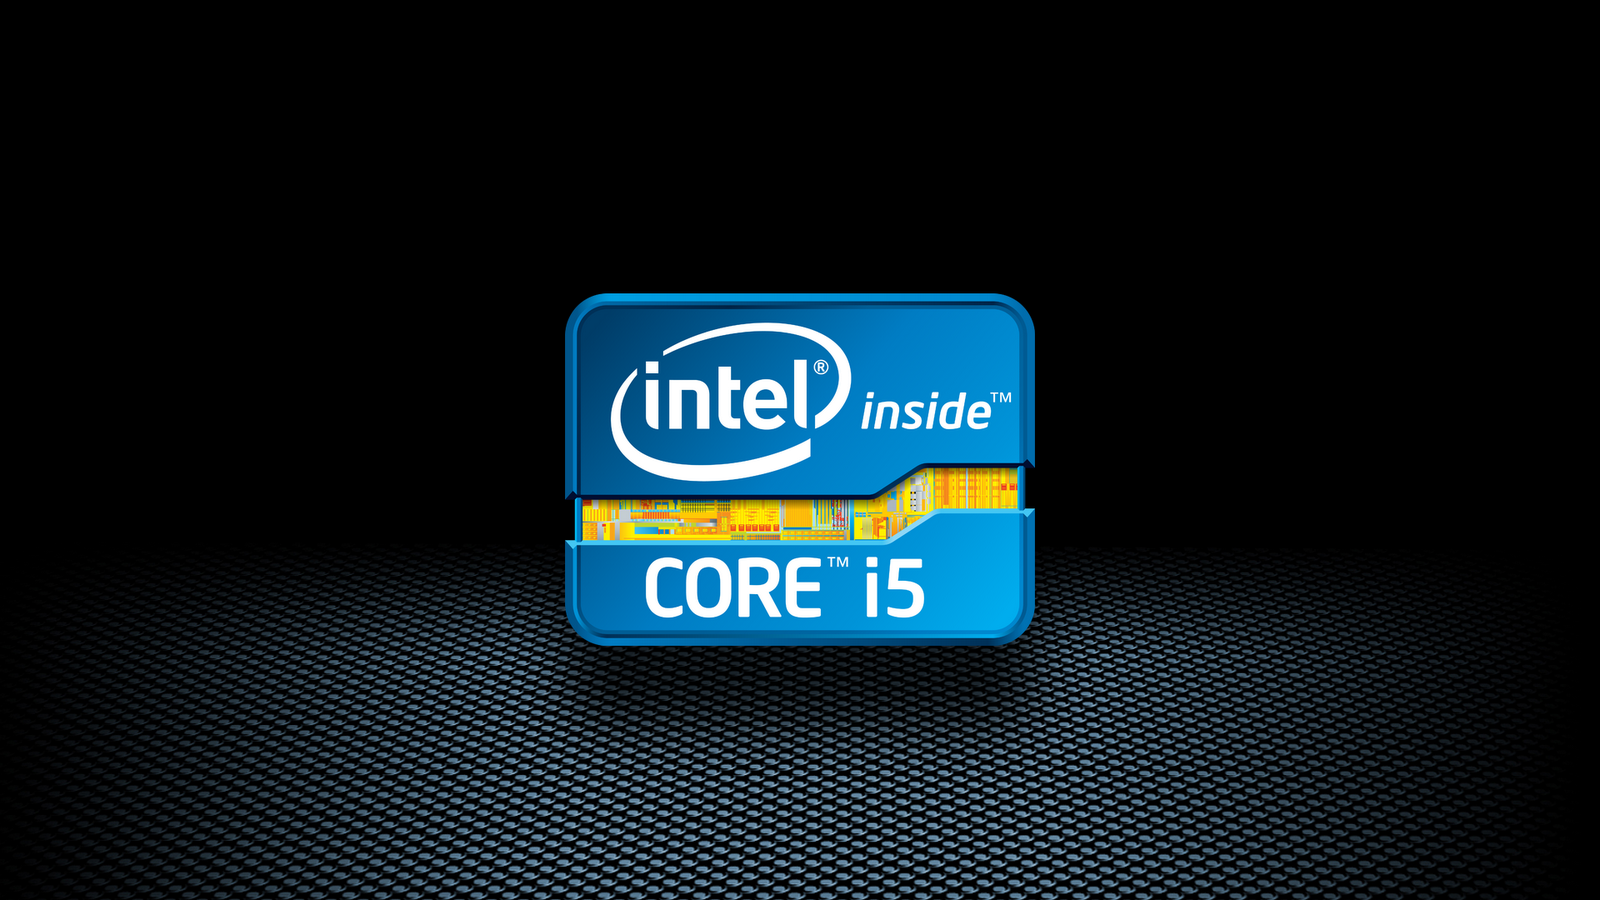 Wallpaper Lovers HD Intel I7